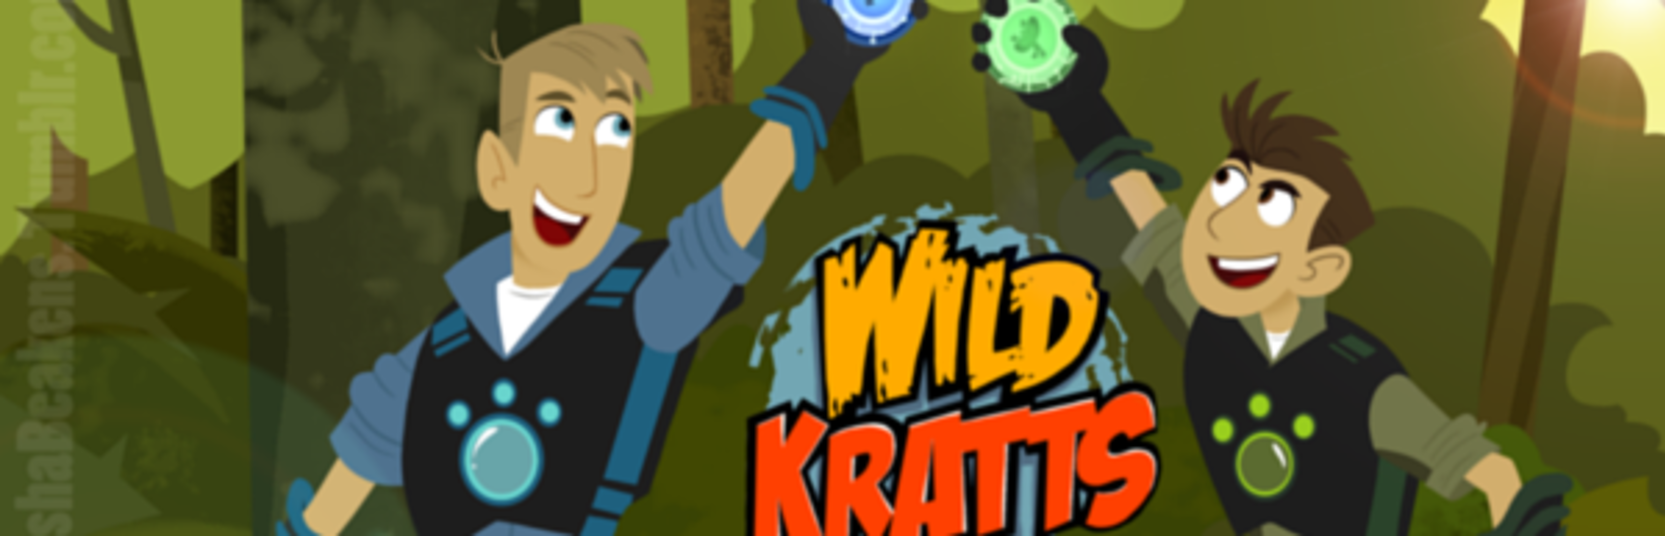 Wild Kratts Cartoon Porn Videos Free - See Wild Kratts Live for a Wild Time...